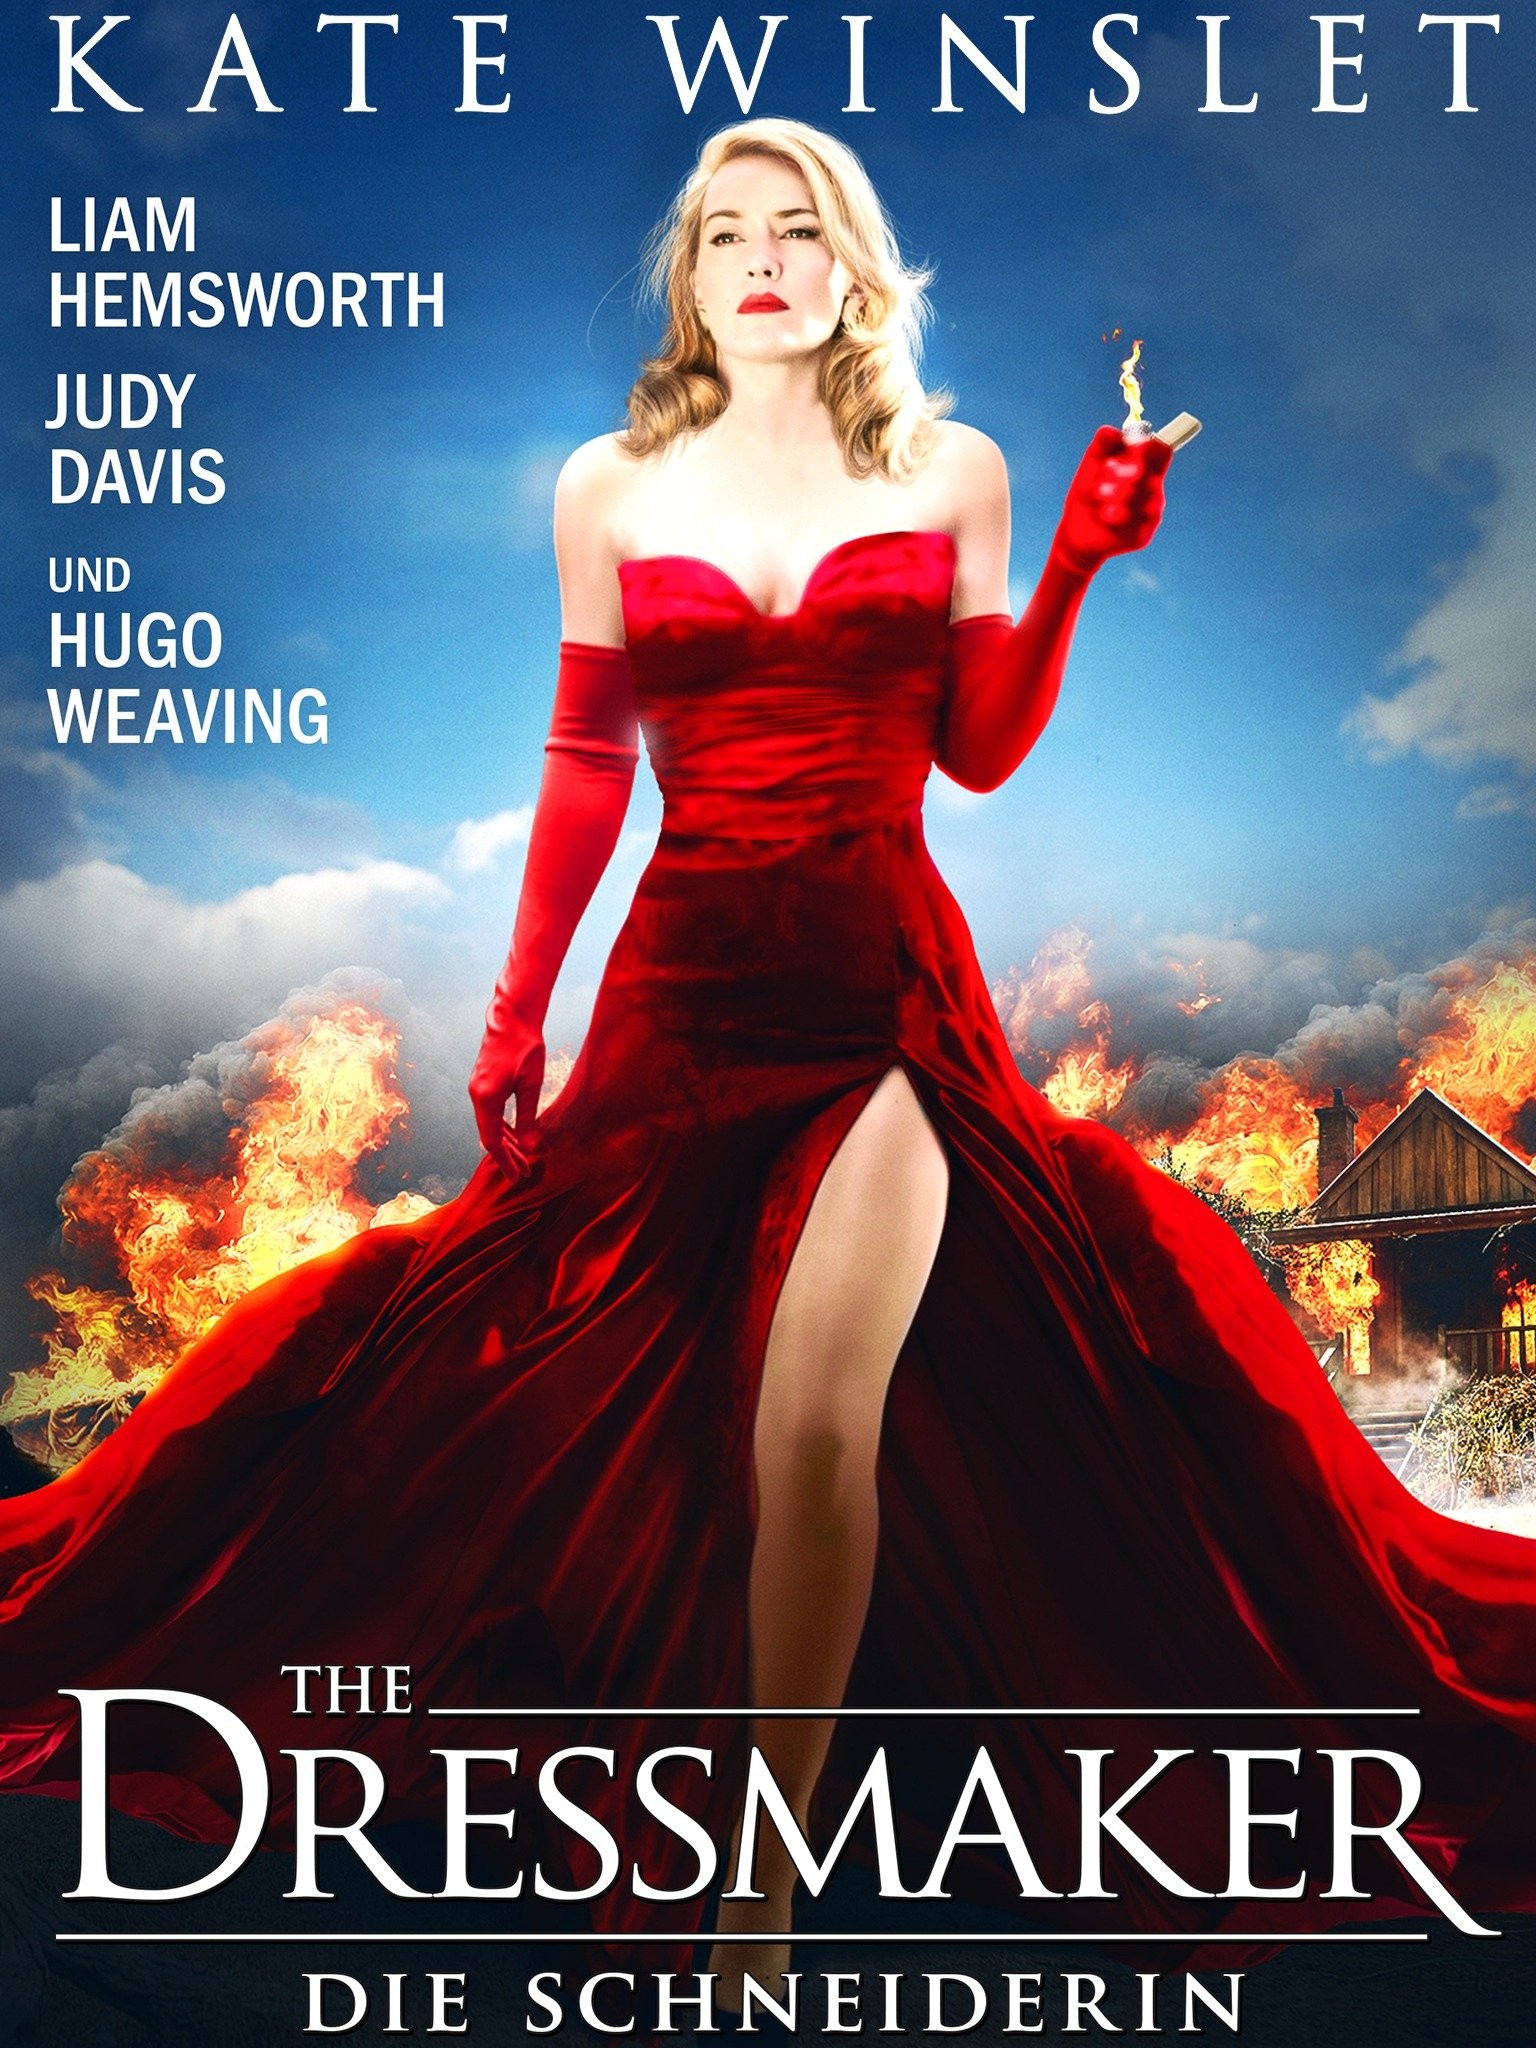 Kate Winslet Wreaks Bespoke Vengeance In 'The Dressmaker' : NPR